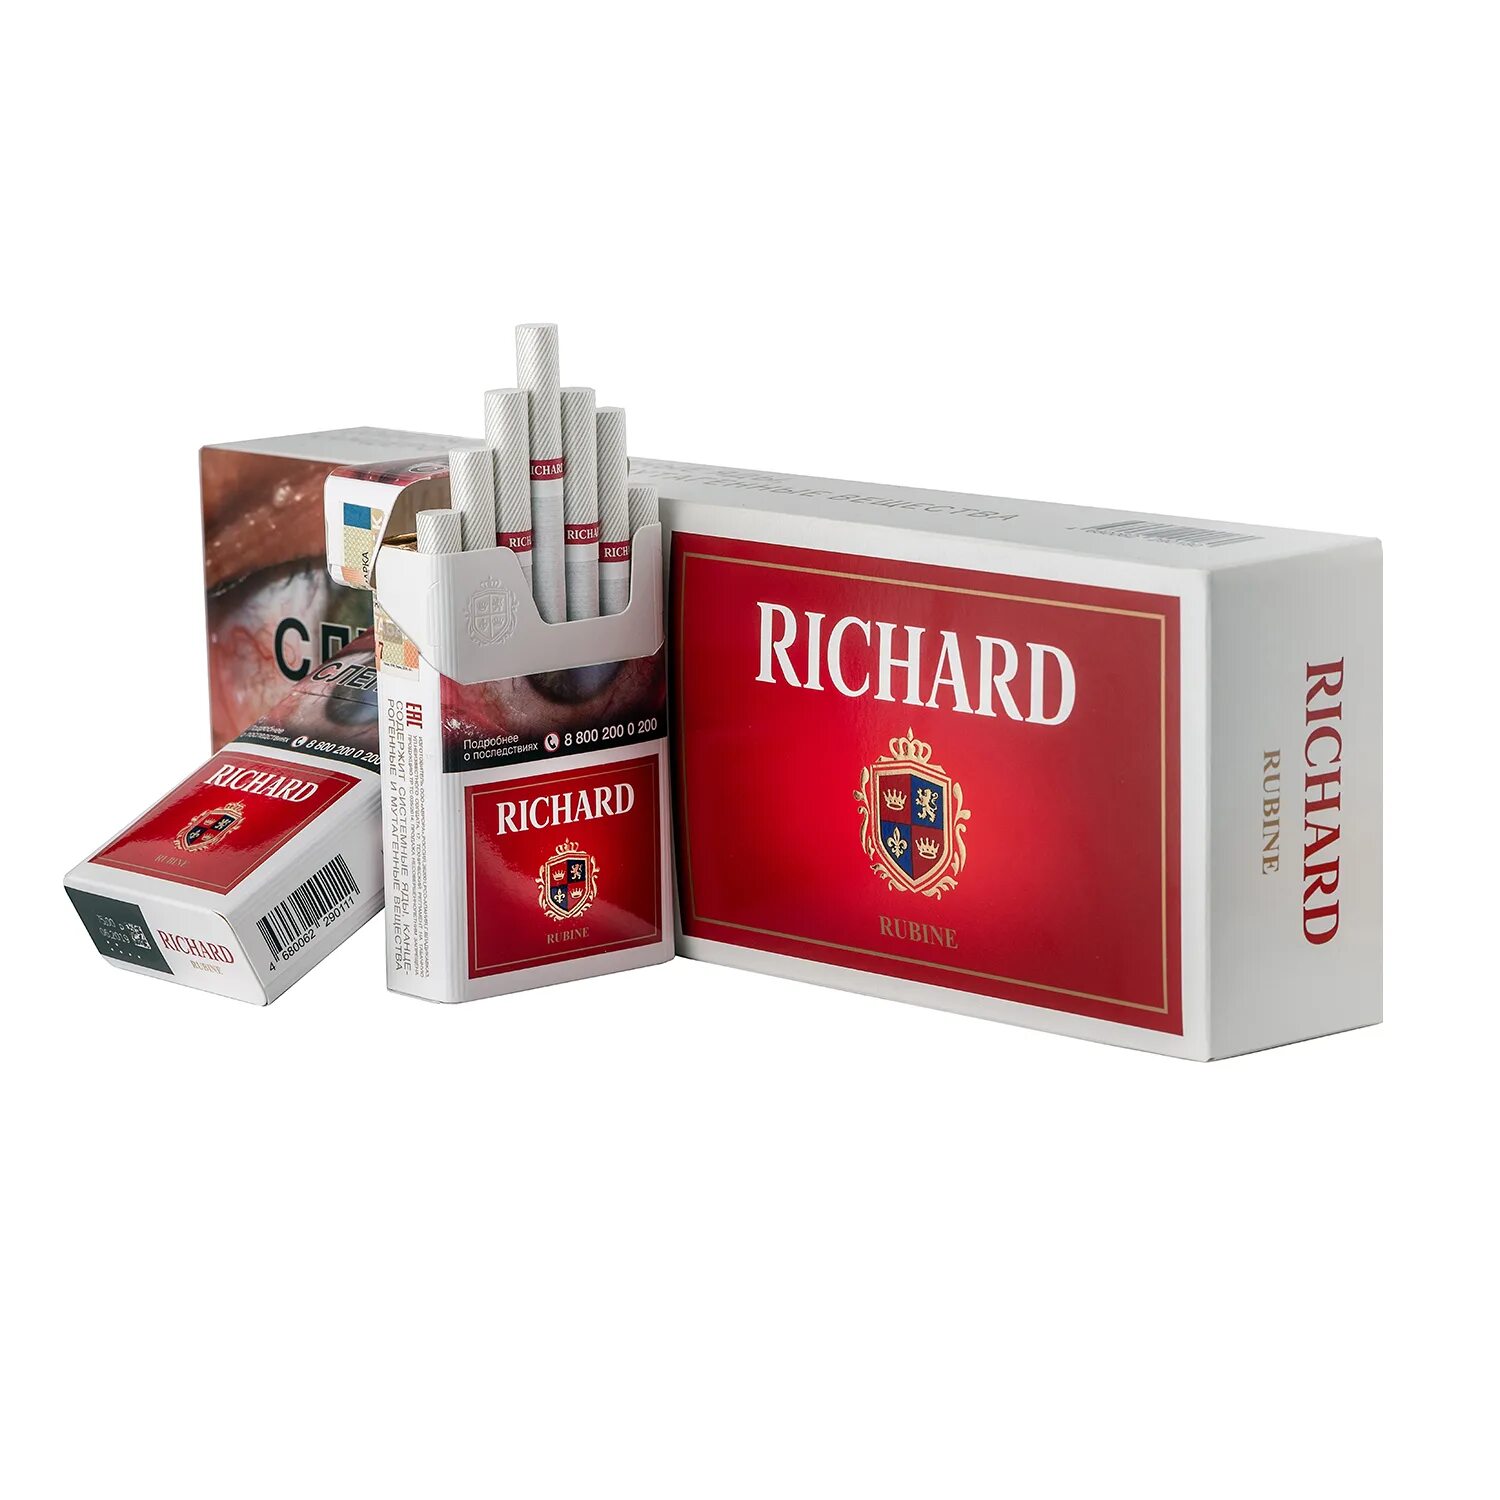 Сигареты Richard Rubine. Сигареты Richard Rubine Compact. Richard Rubine коричневые сигареты. Richard Brilliant Compact сигареты.